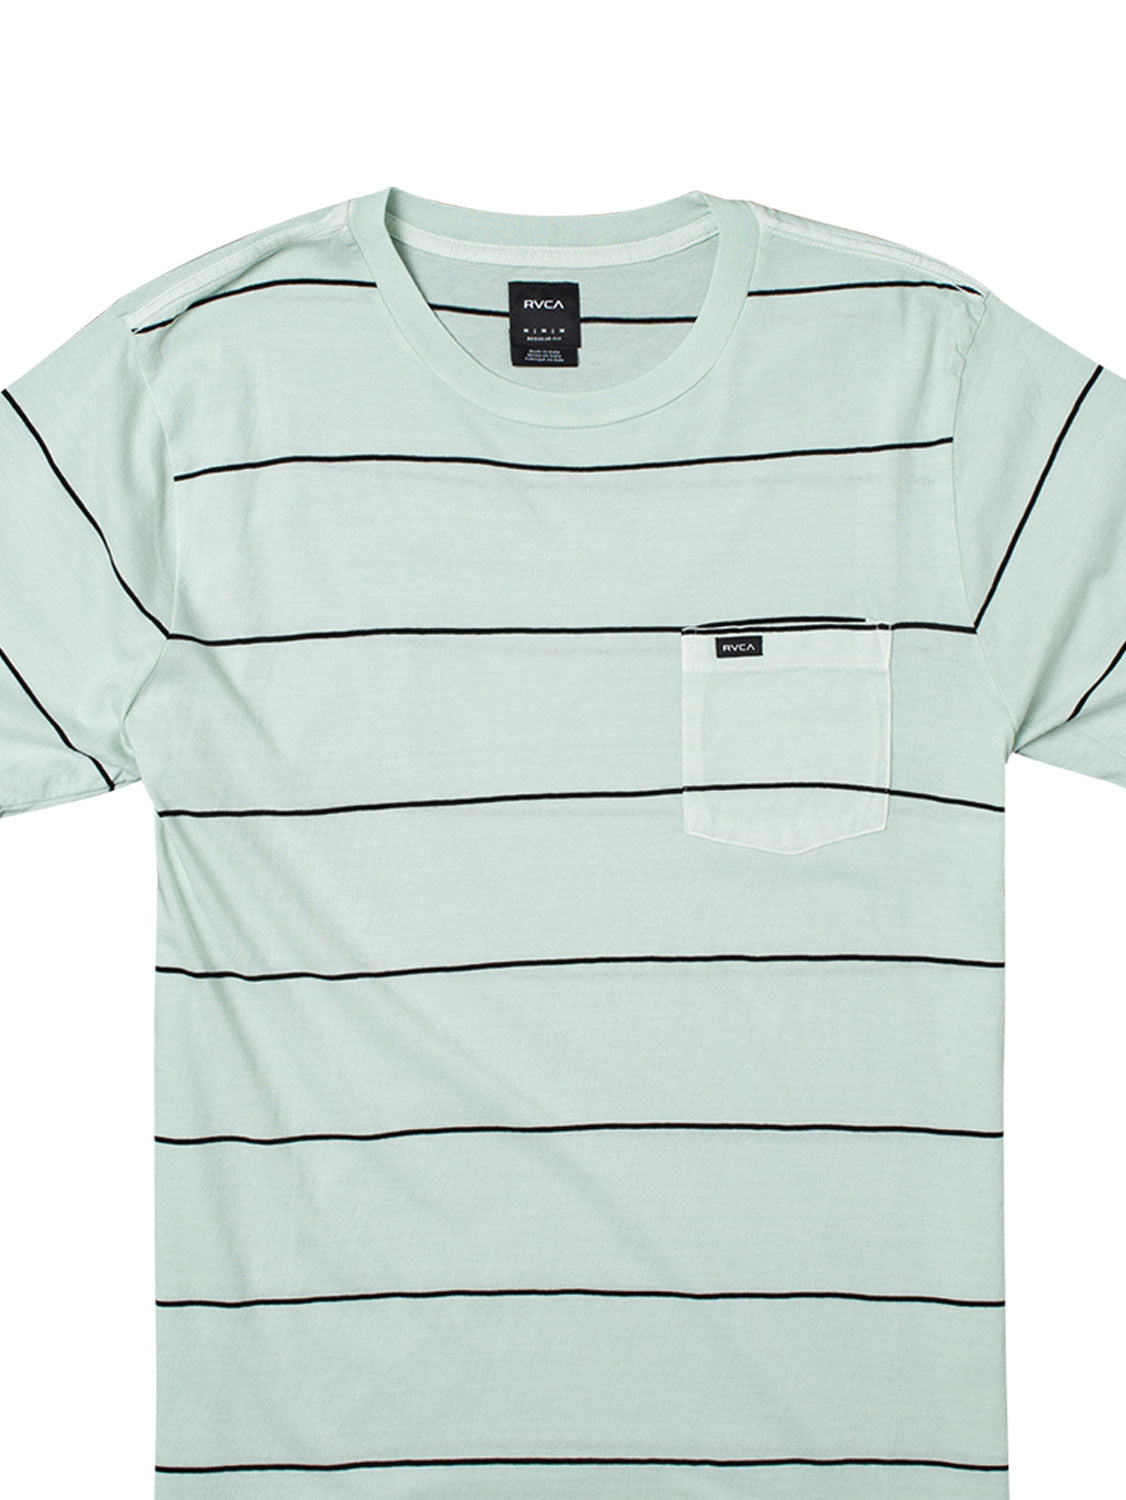 RVCA Men's Stripe II T-Shirt